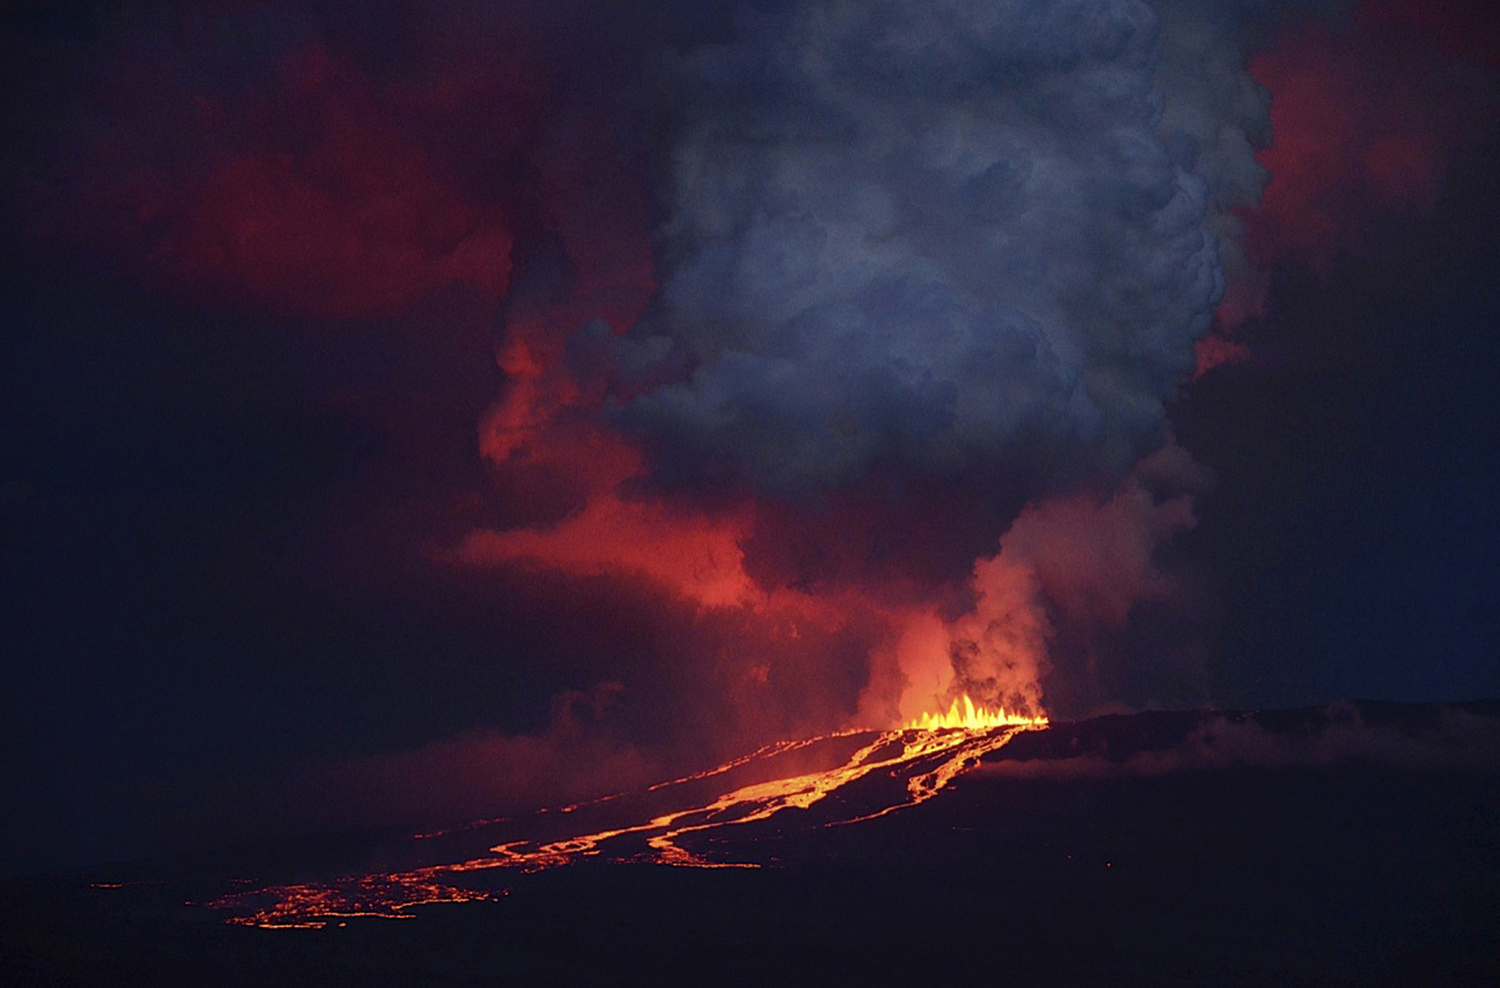 Volcanoes essay conclusion